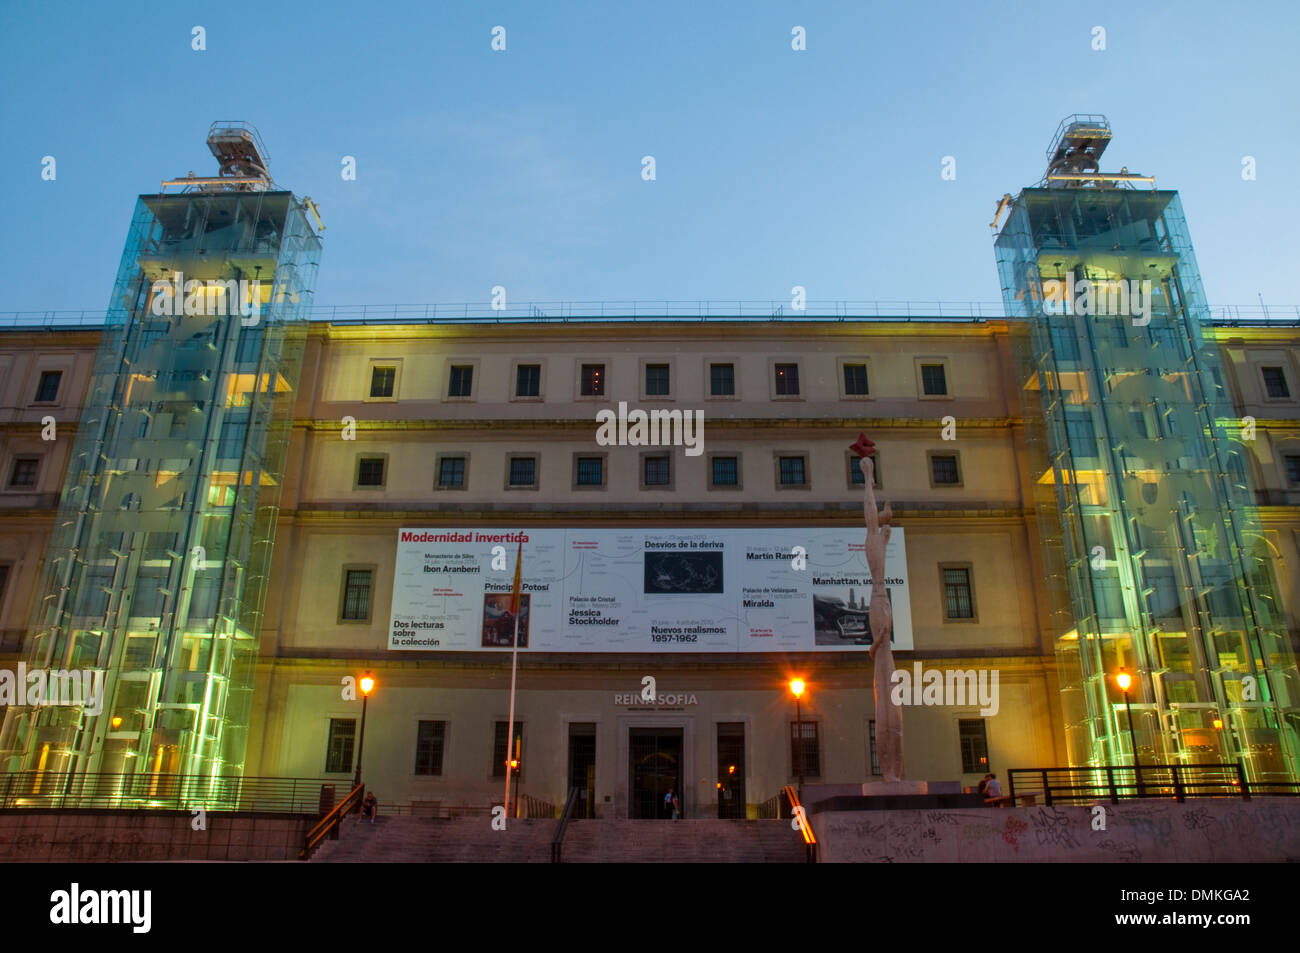 Facade of Art Center Reina Sofia National Museum, night view. Madrid, Spain. Stock Photo